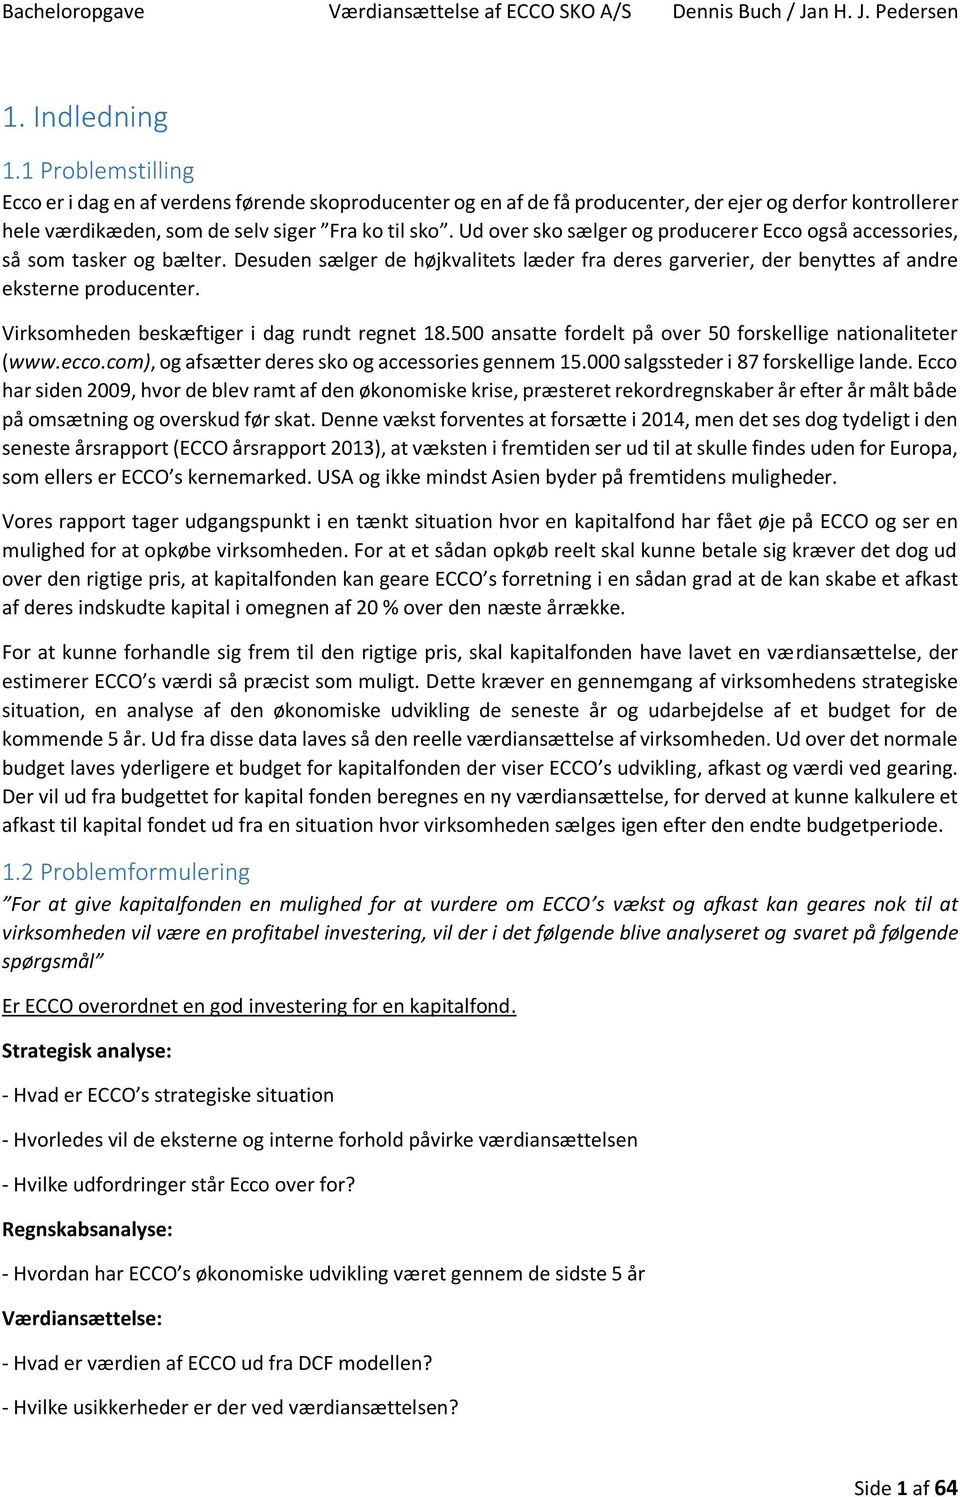 A valuation of the Danish shoe company ECCO SKO A/S - PDF Gratis download